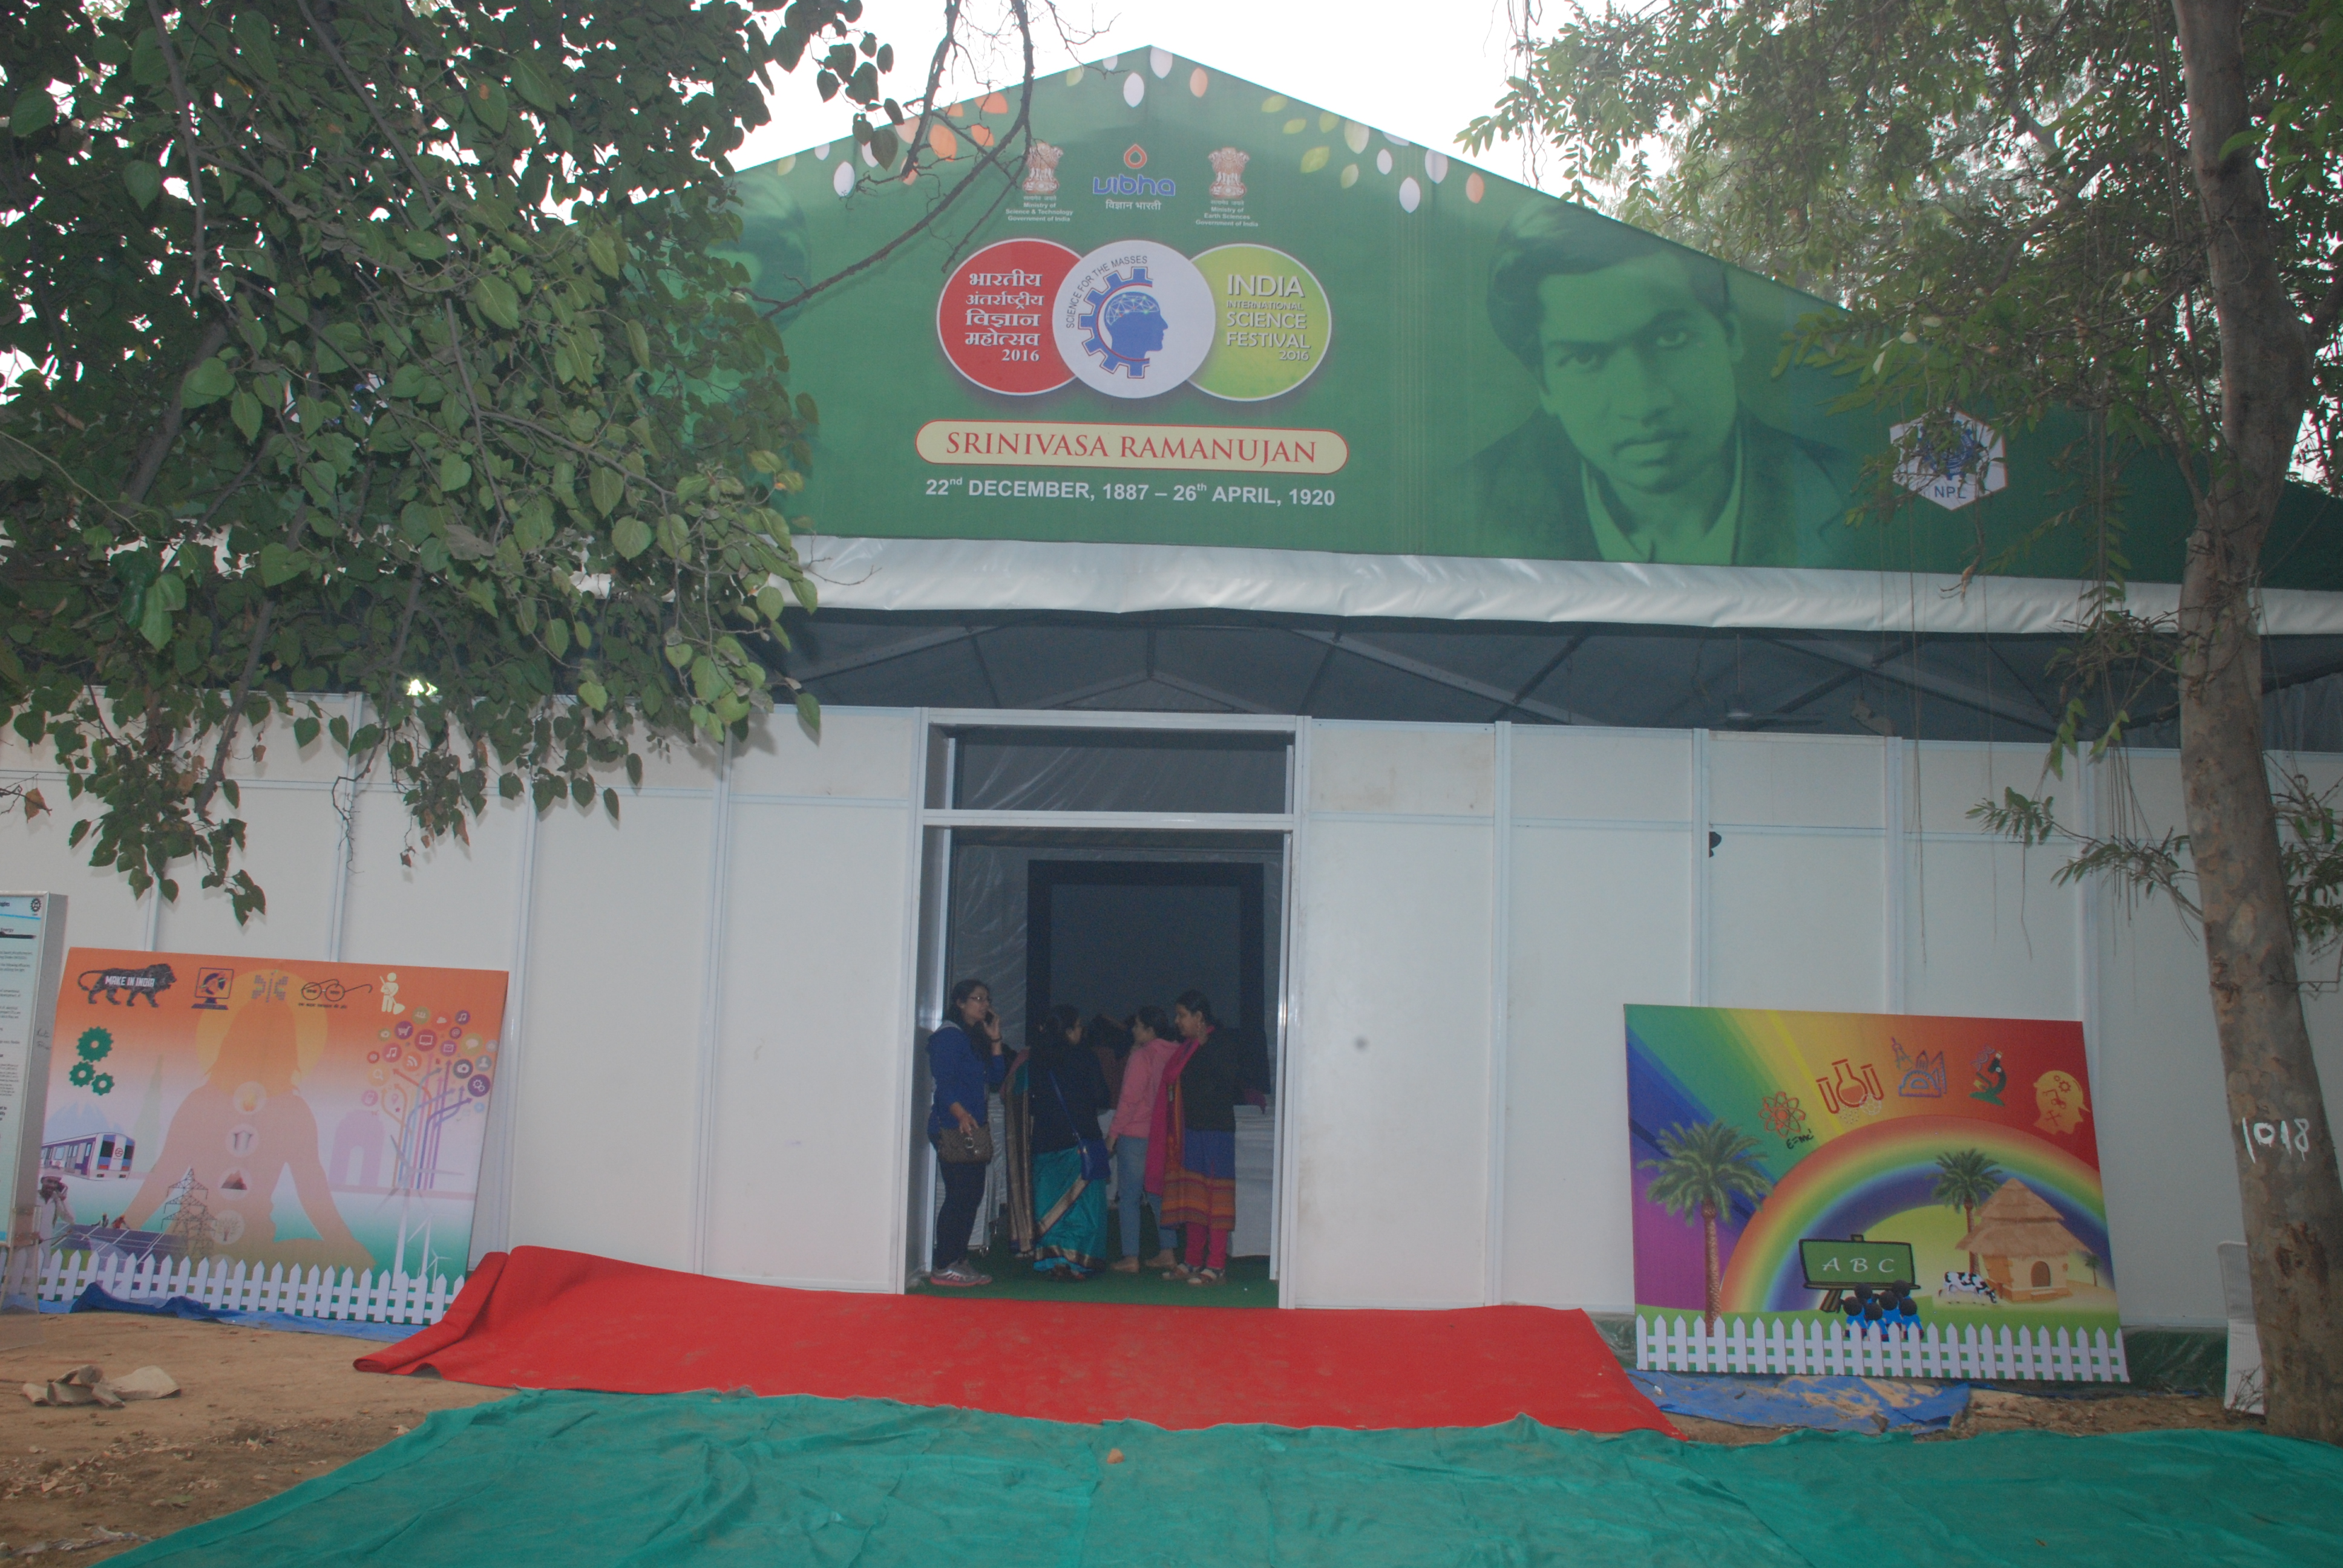  Eminent mathematician Srinivasa Ramanujan house in Science Village at IISF 2016